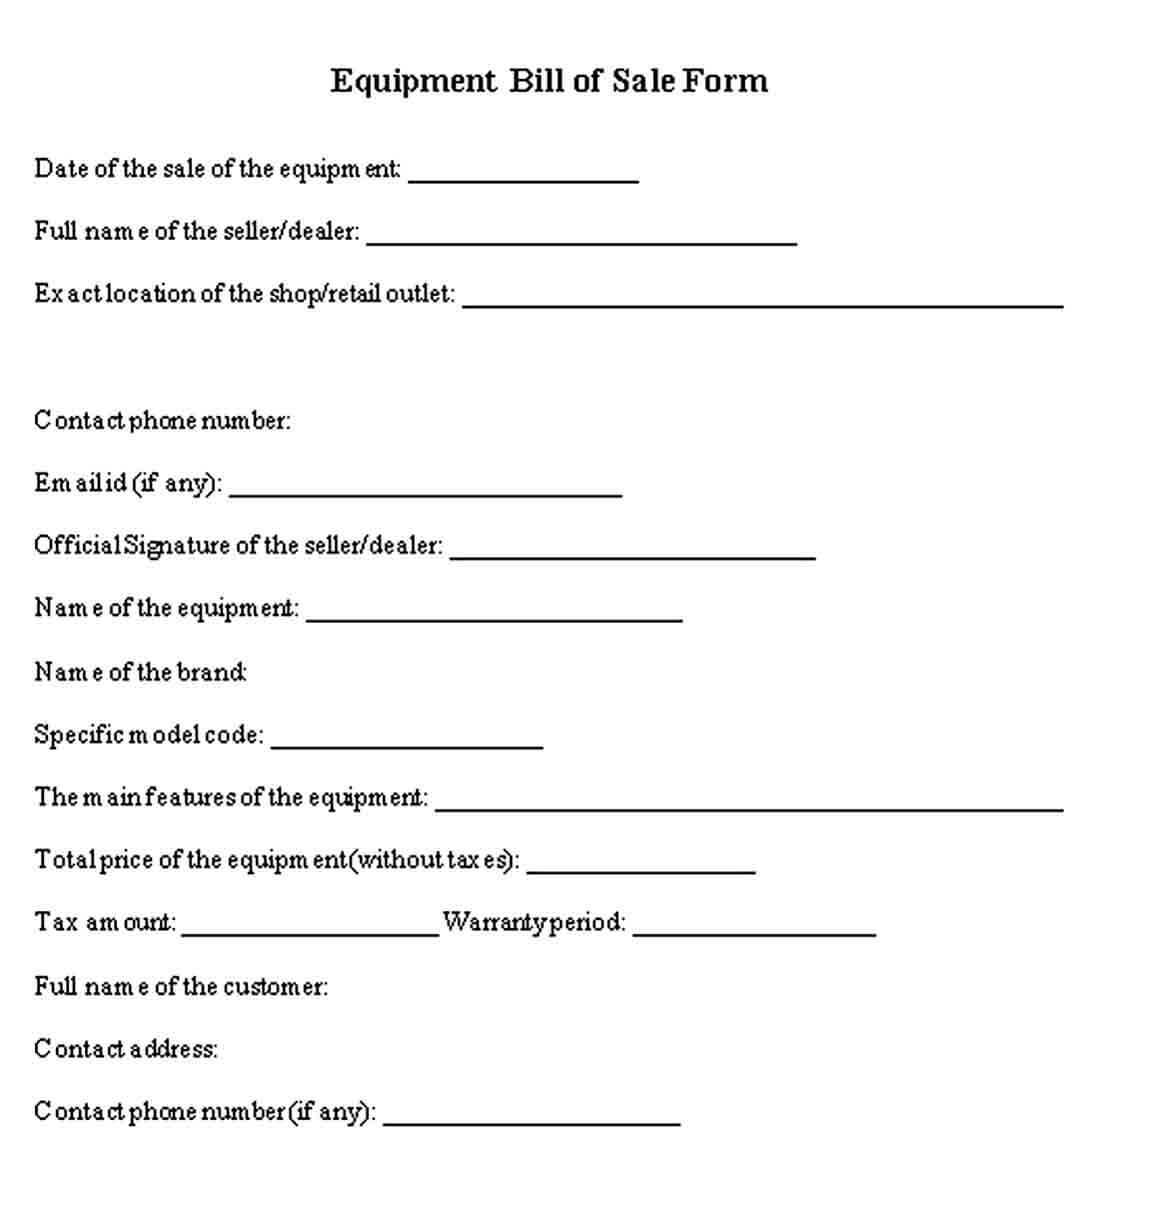 Equipment Bill of Sale Form Free Printable